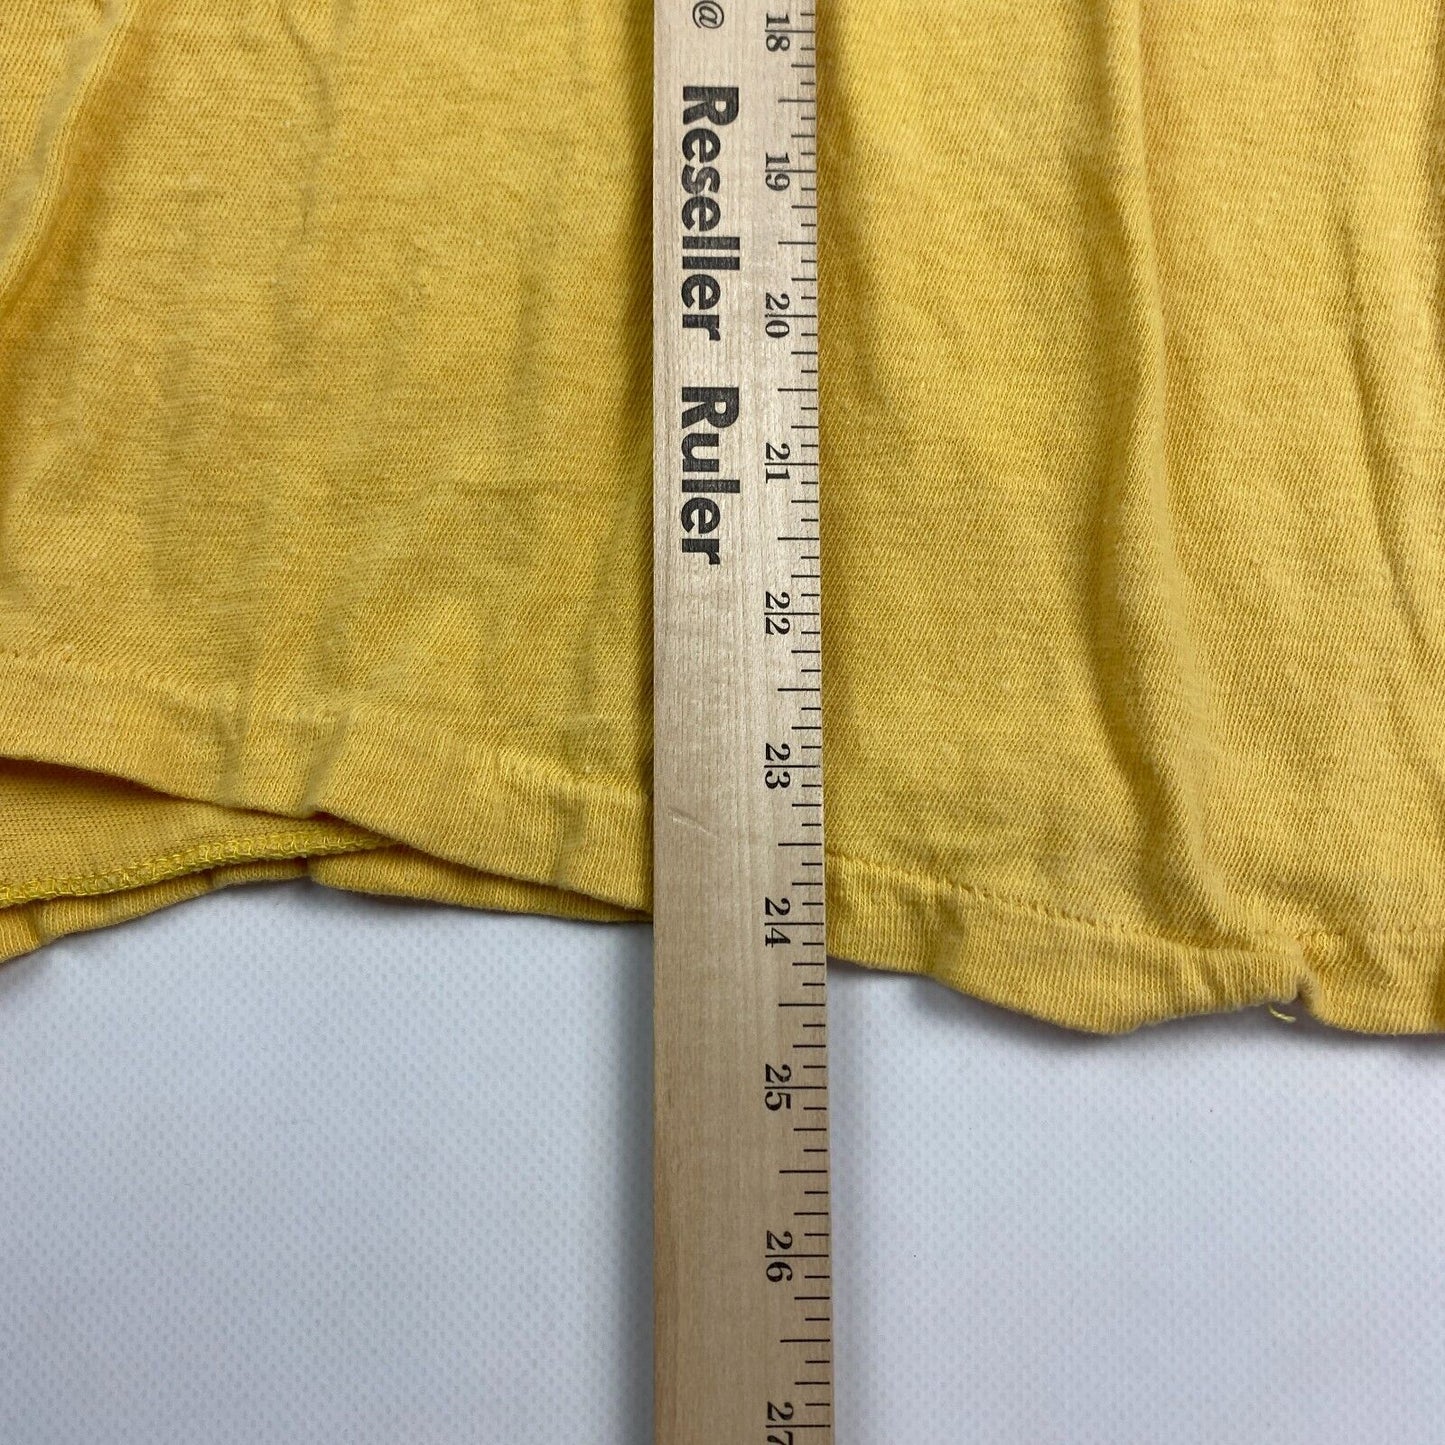 VINTAGE 80s New York The Big Apple Graphic Yellow T-Shirt sz Large Men